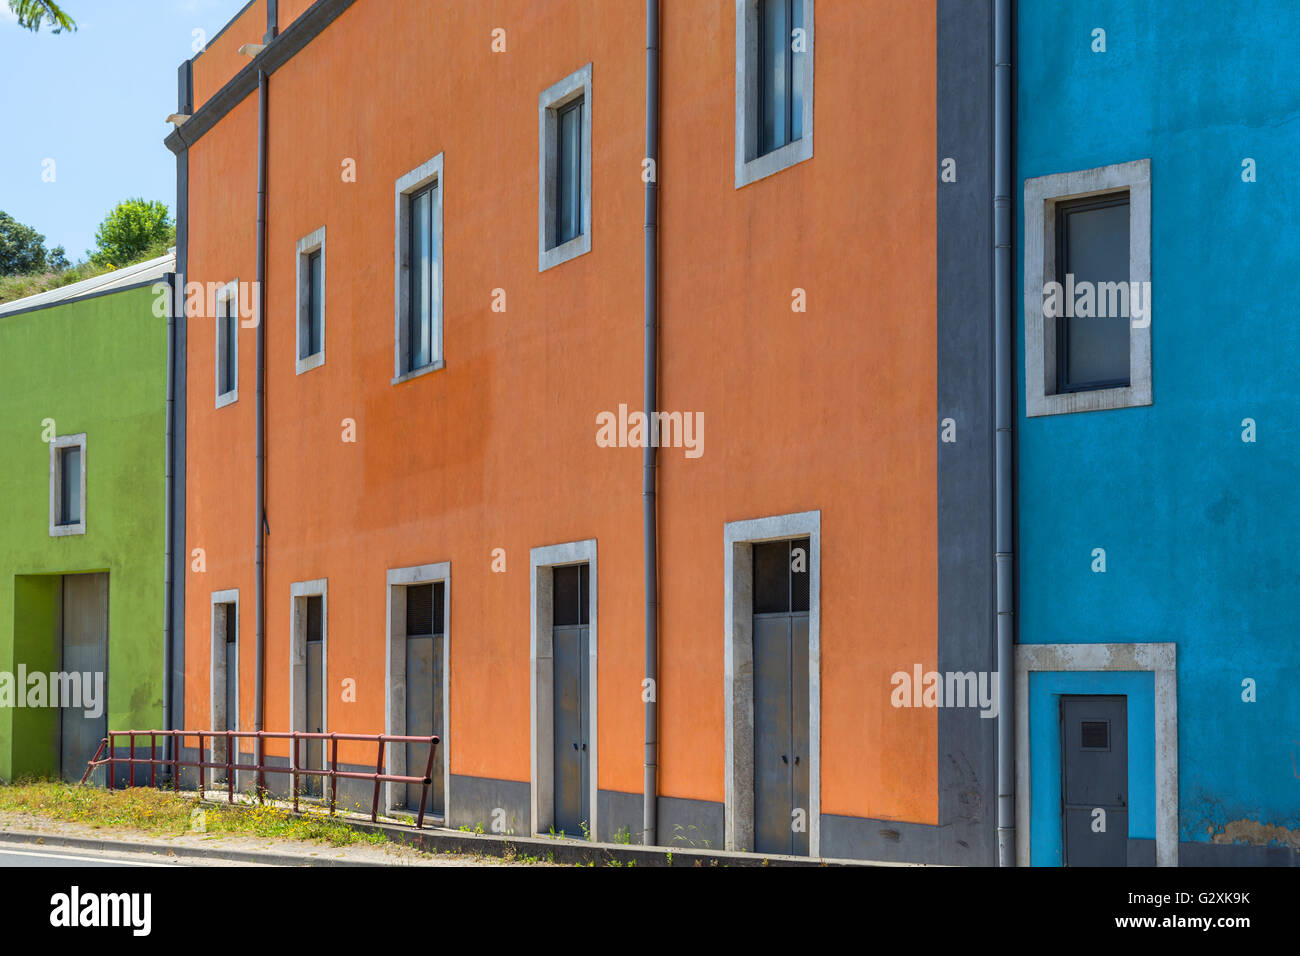 colored facades building in european city Stock Photo